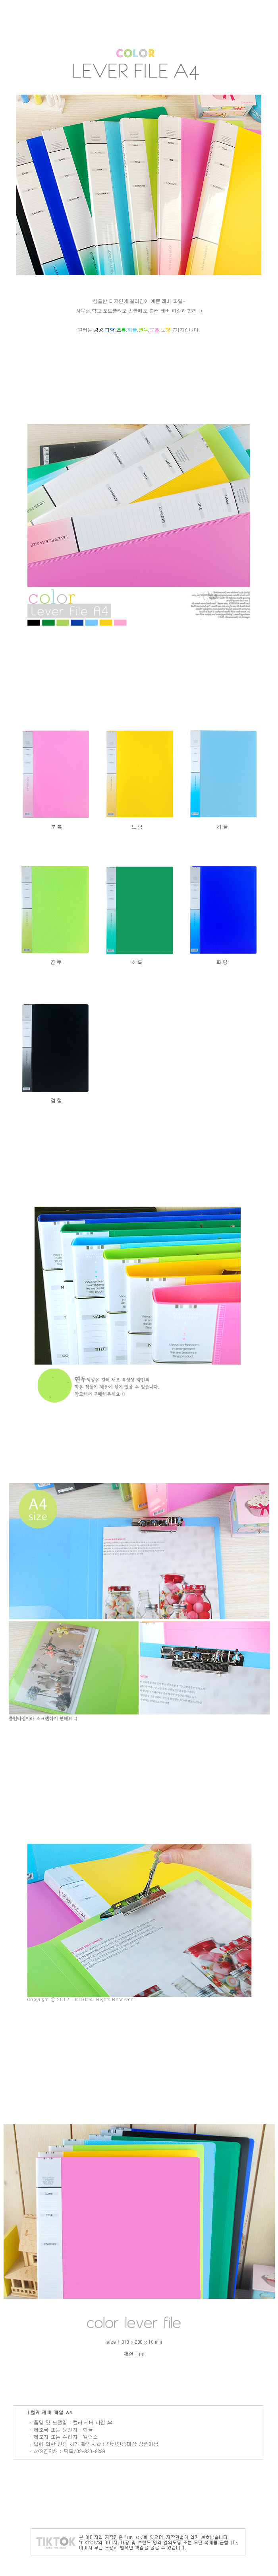 Color Lever File A4 2,100원 - 대하 디자인문구, 파일/바인더, 파일/클립보드, 레버화일 바보사랑 Color Lever File A4 2,100원 - 대하 디자인문구, 파일/바인더, 파일/클립보드, 레버화일 바보사랑